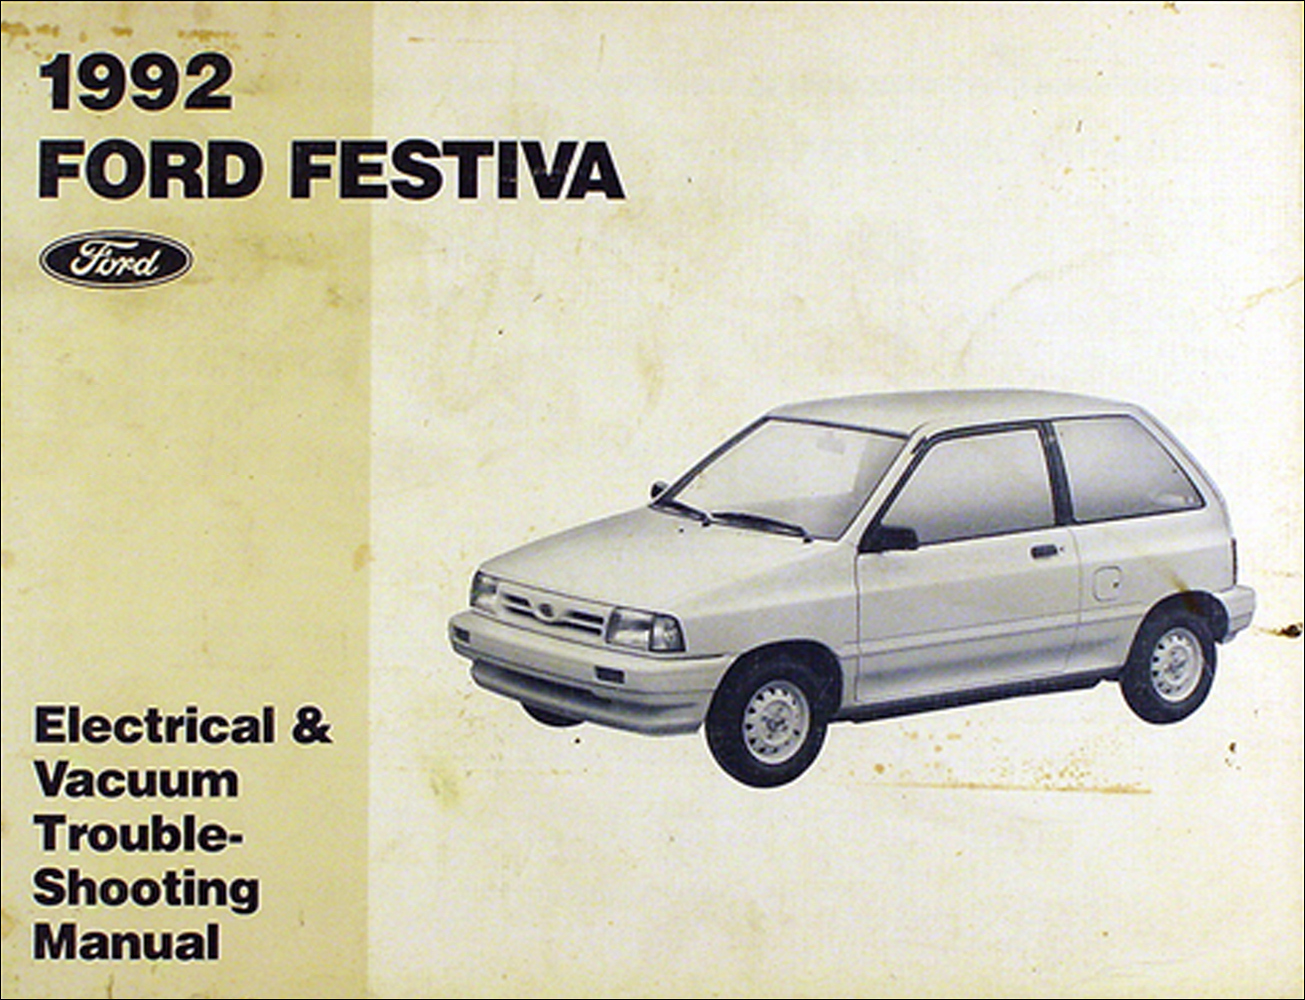 1992 Ford Festiva Original Electrical & Vacuum Troubleshooting Manual